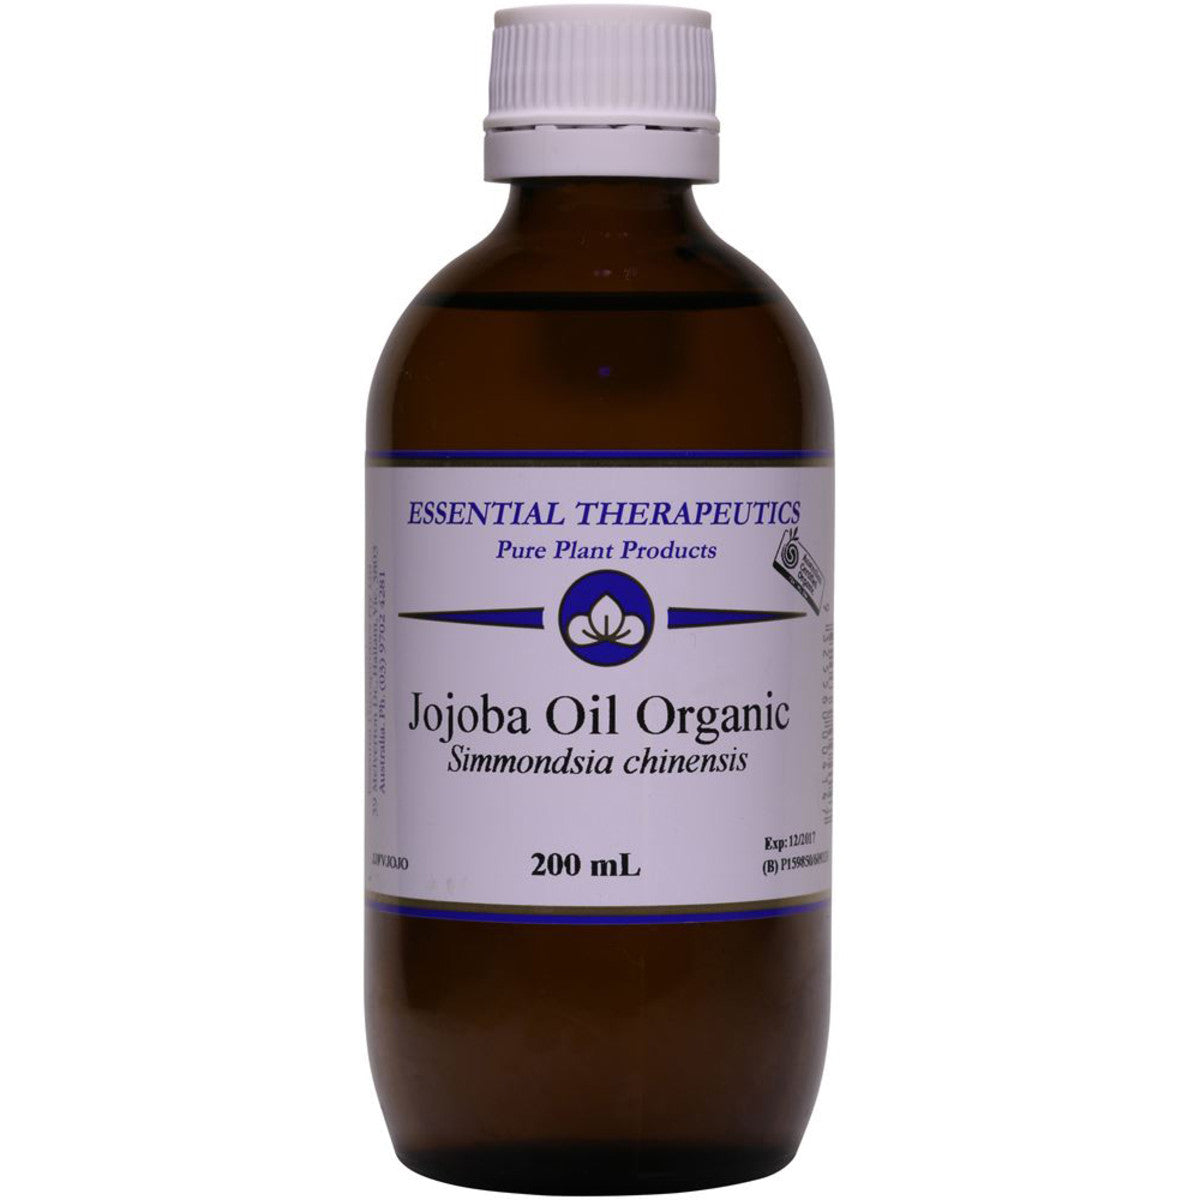 ESSENTIAL THERAPEUTICS Vegetable Oil Organic Jojoba 200ml